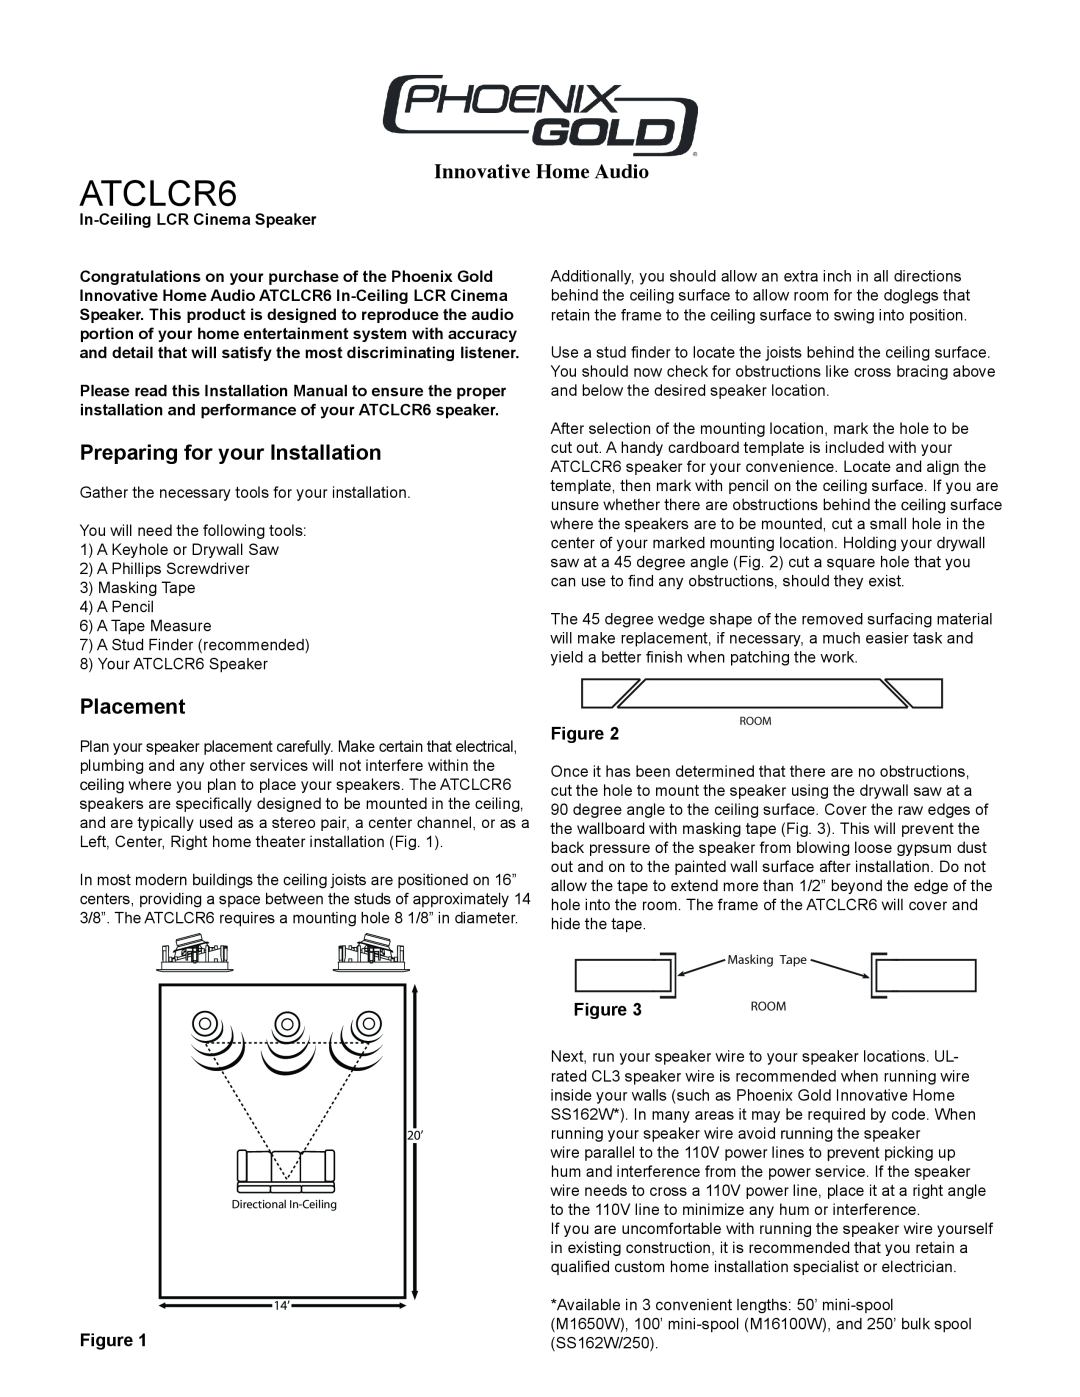 Phoenix Gold In-Celing LCR Cinema Speaker installation manual Innovative Home Audio, ATCLCR6 